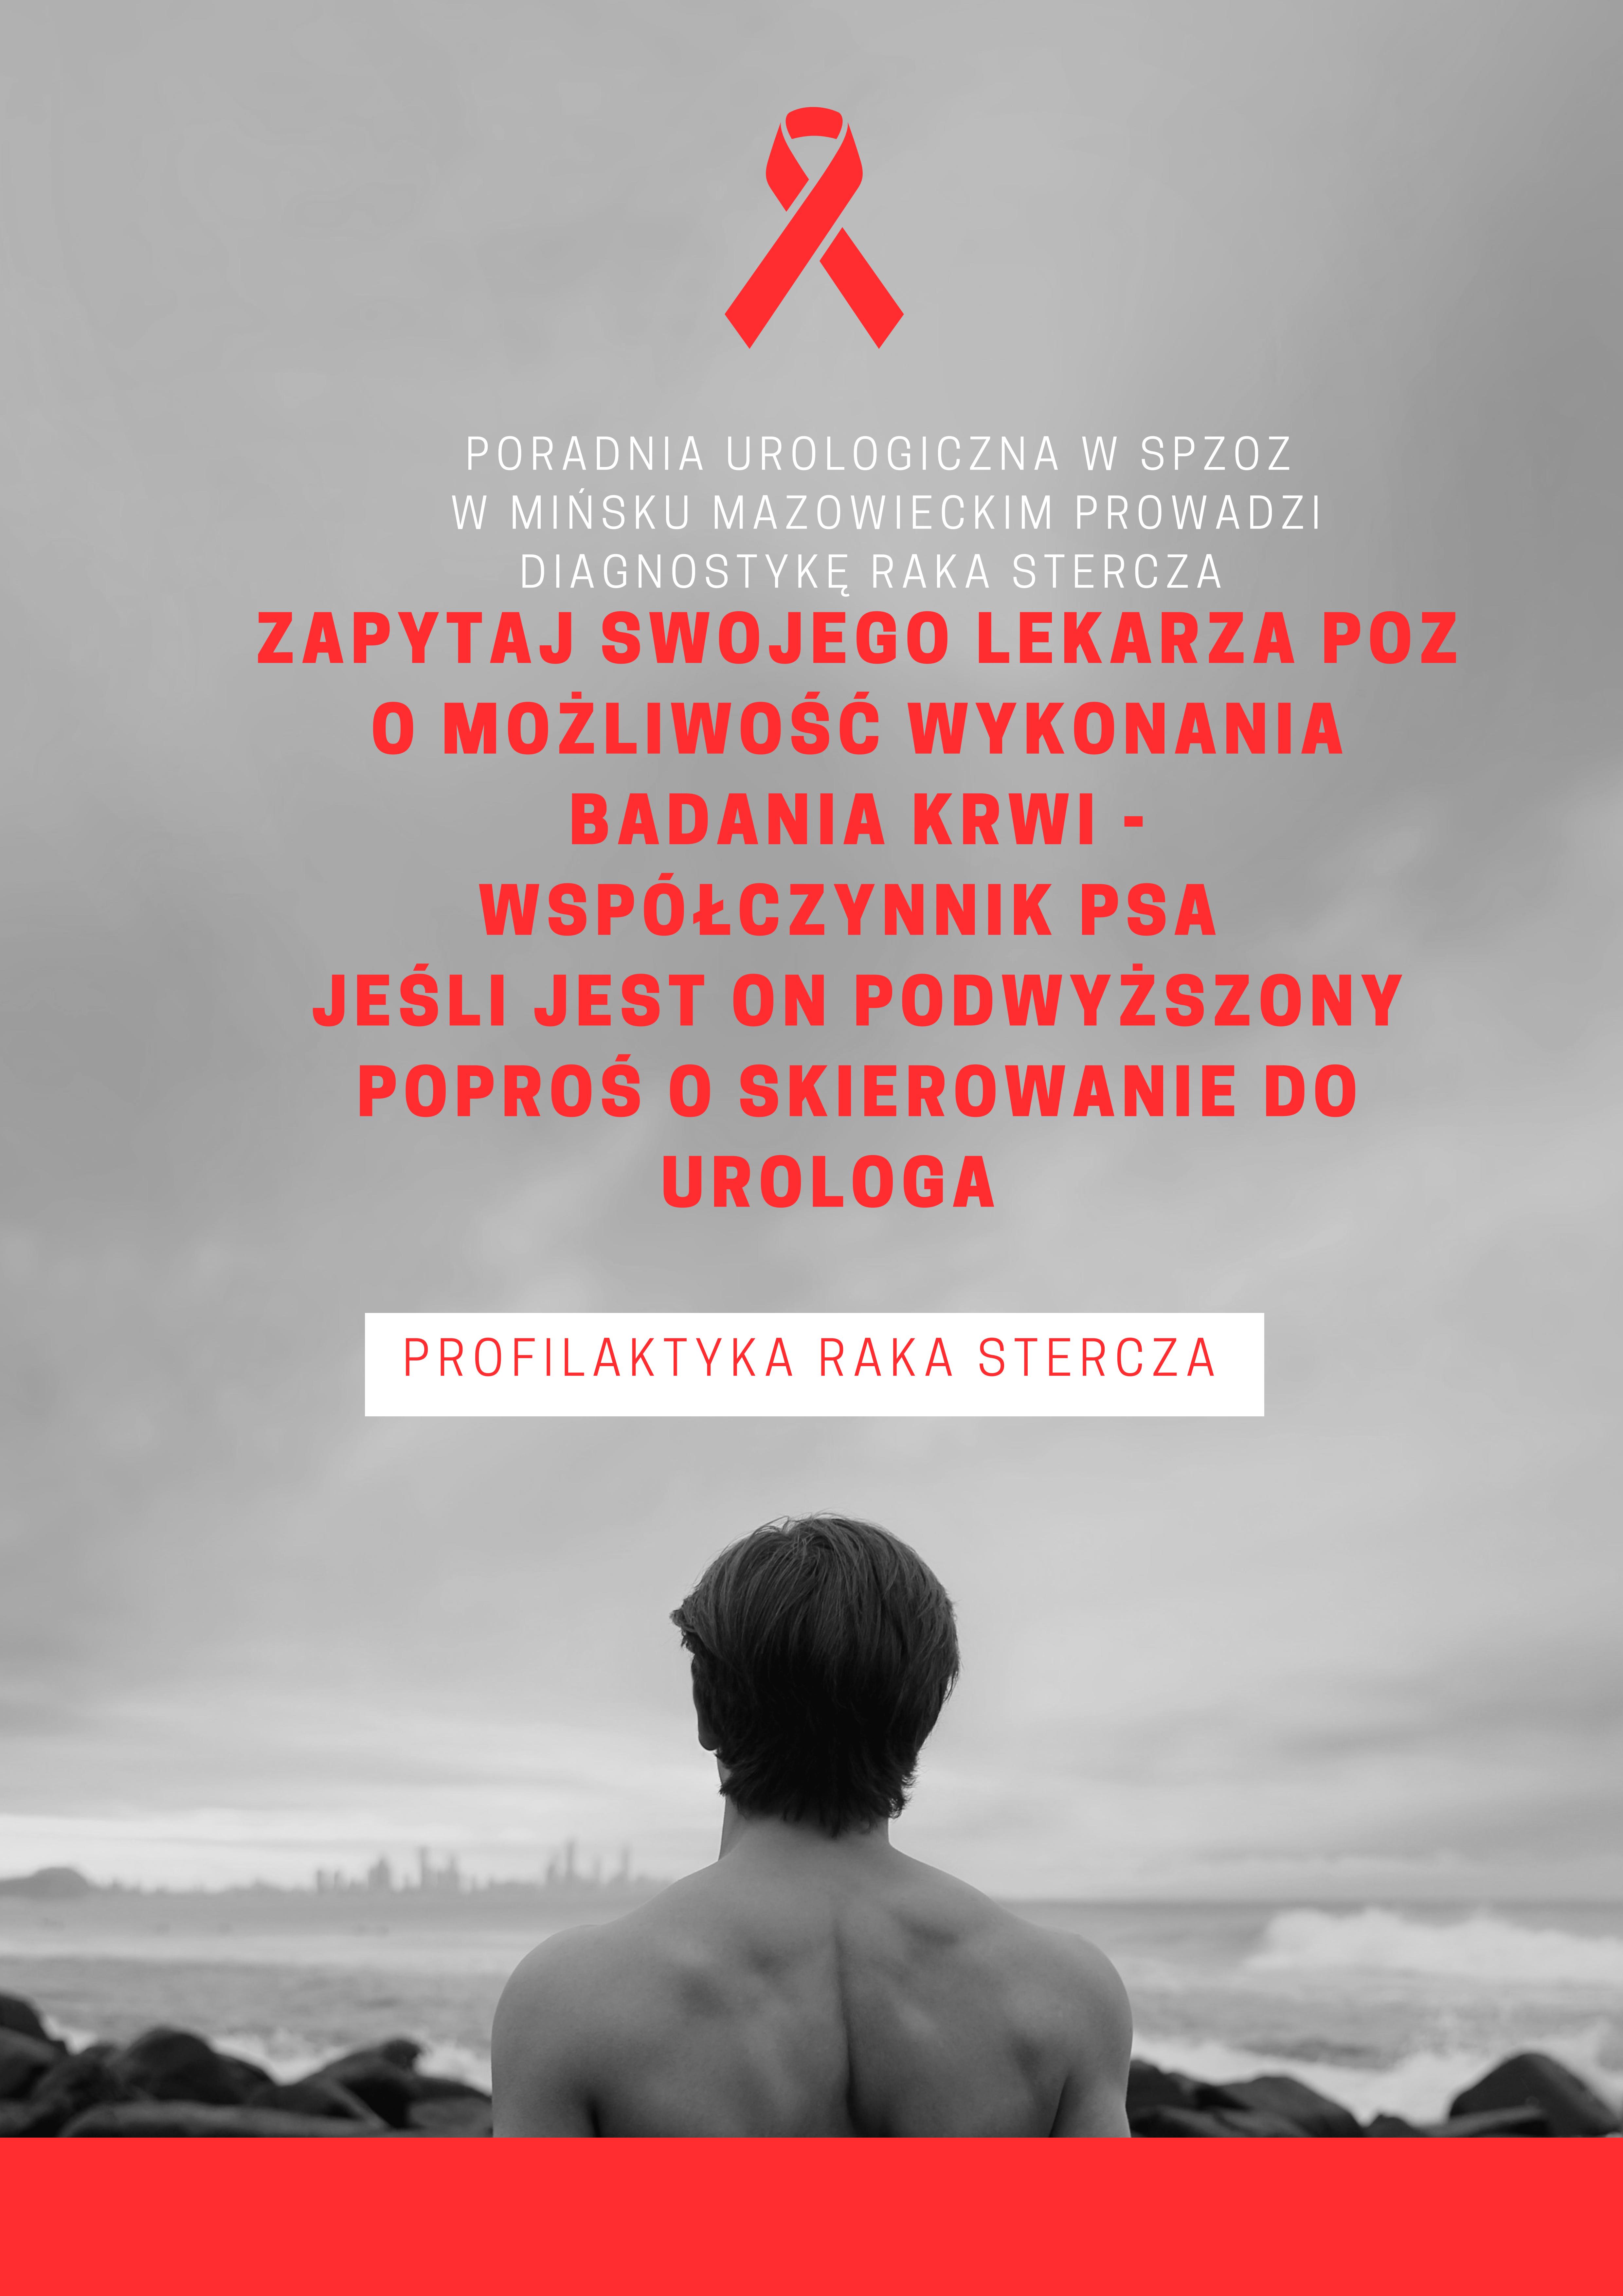 You are currently viewing Profilaktyka Raka Stercza